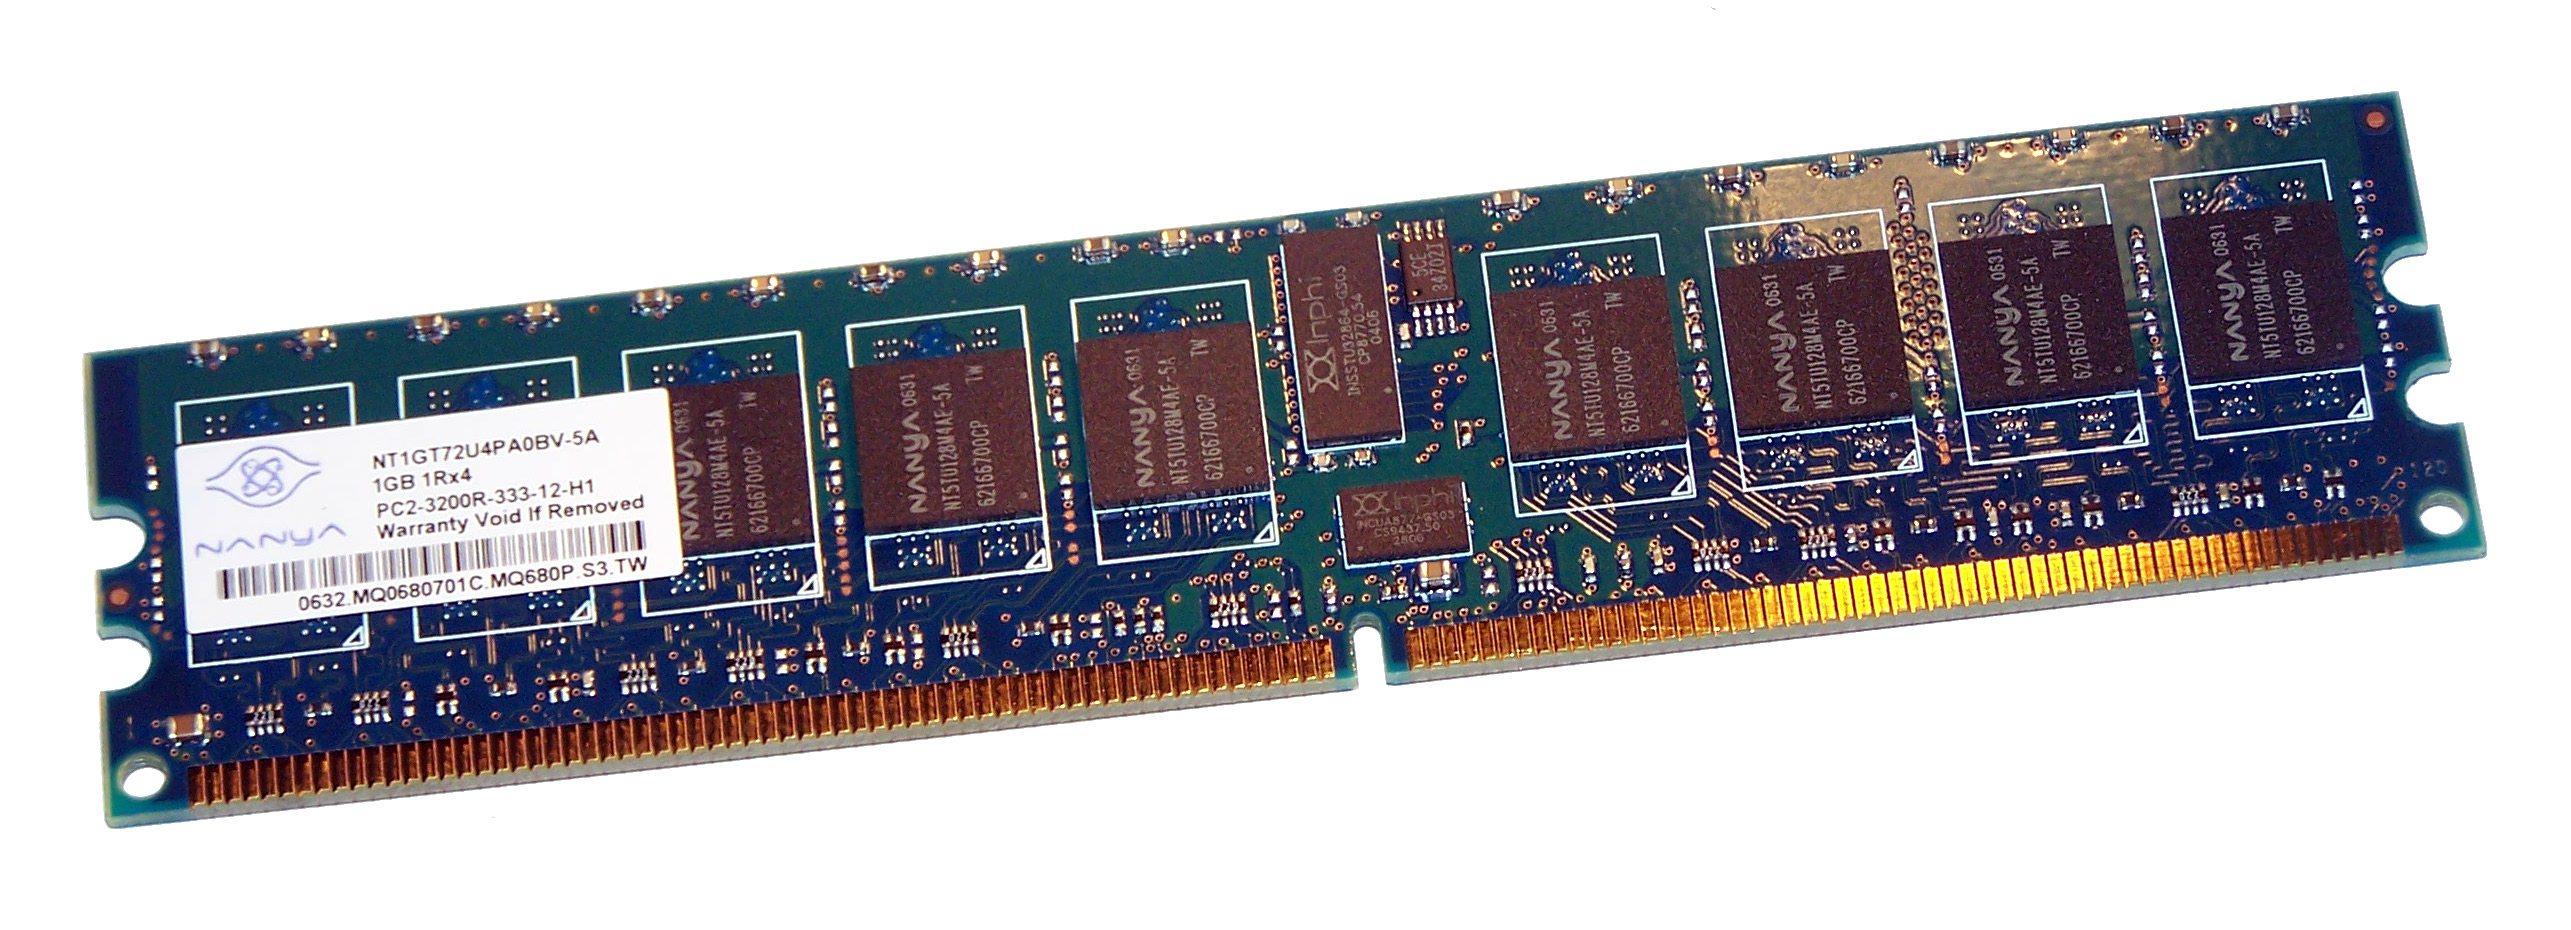 1GB SERVER DIMM DDR2 PC3200(400) REG ECC 1.8v 1RX4 240P 128MX72 128mX4 CL3 8